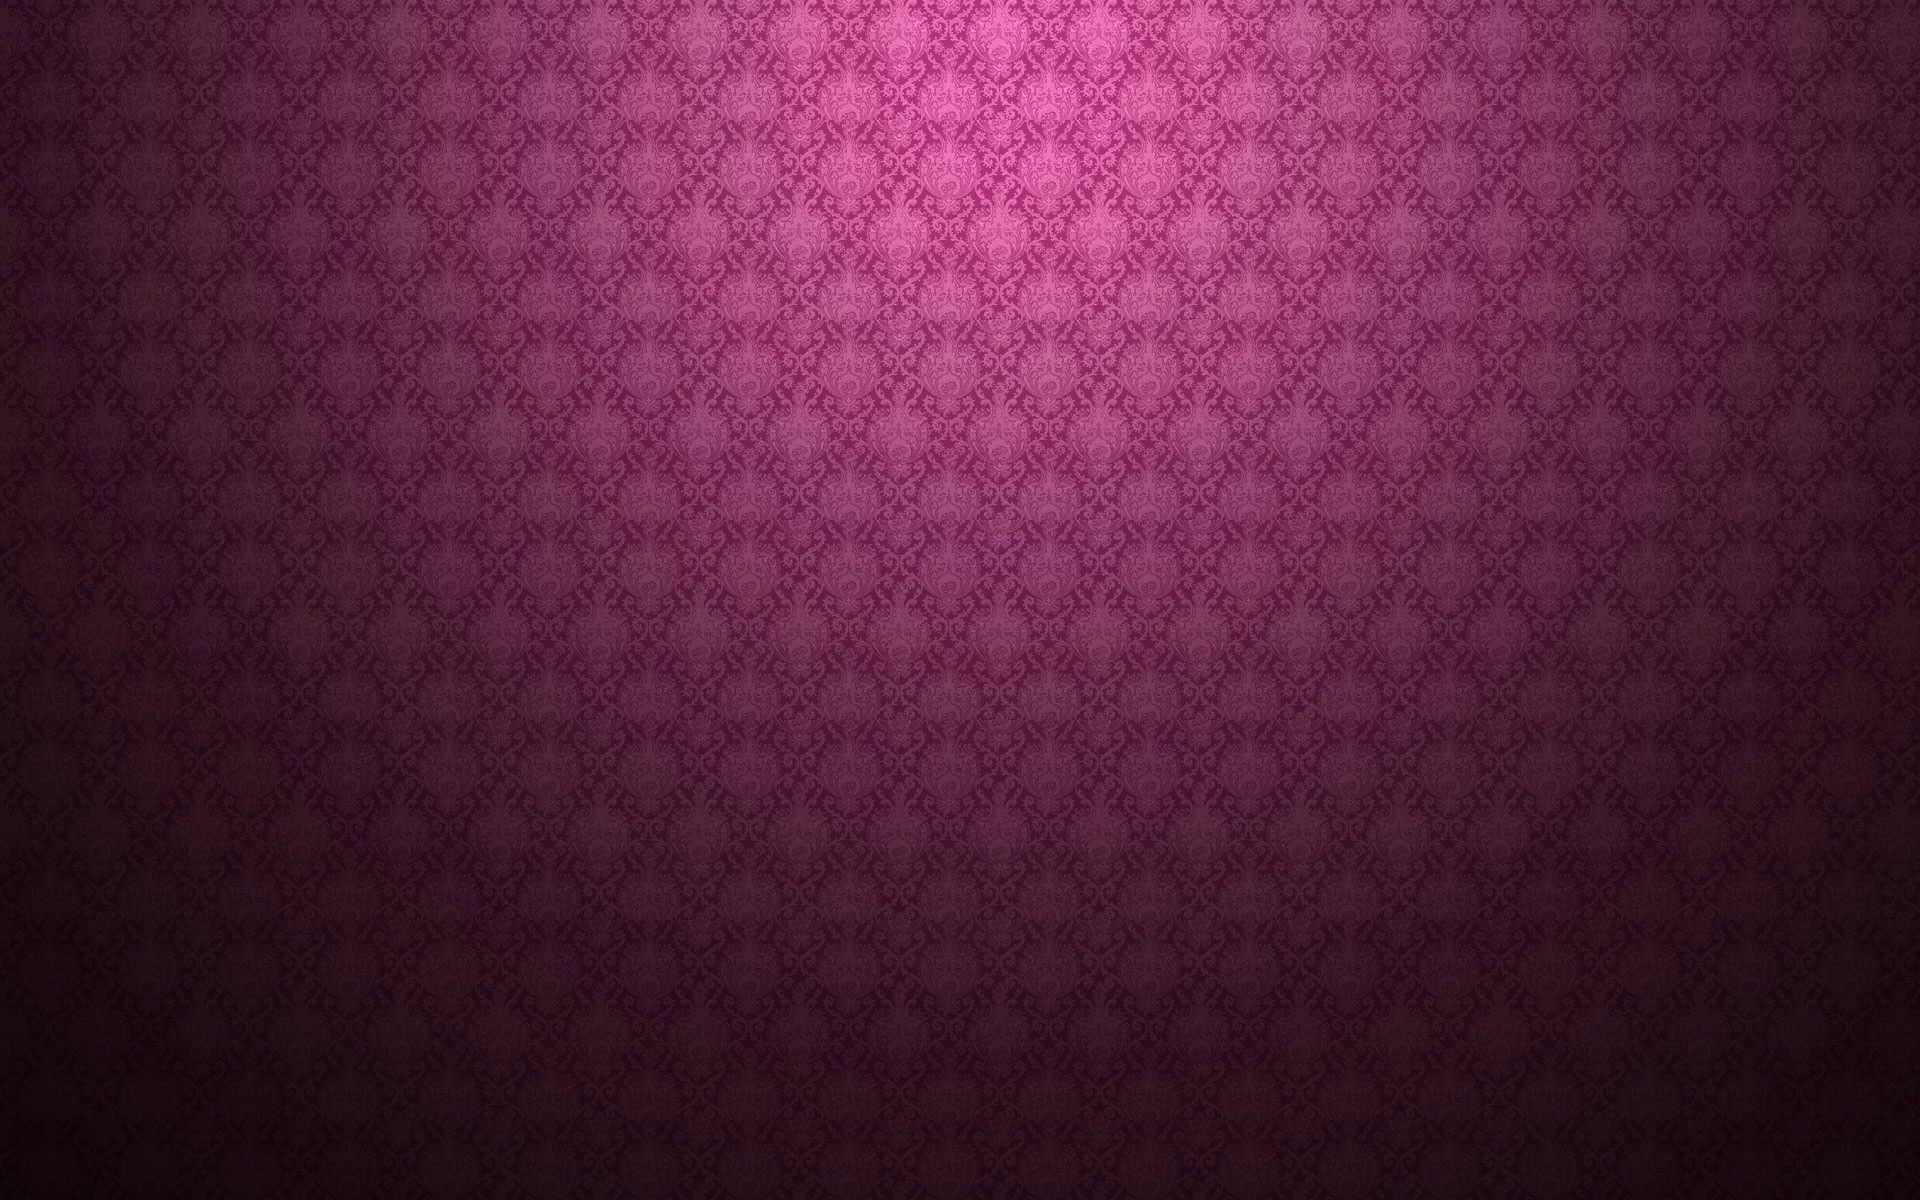 Pink Patterns Wallpaper 1920x1200 Pink Patterns Textures 1920x1200